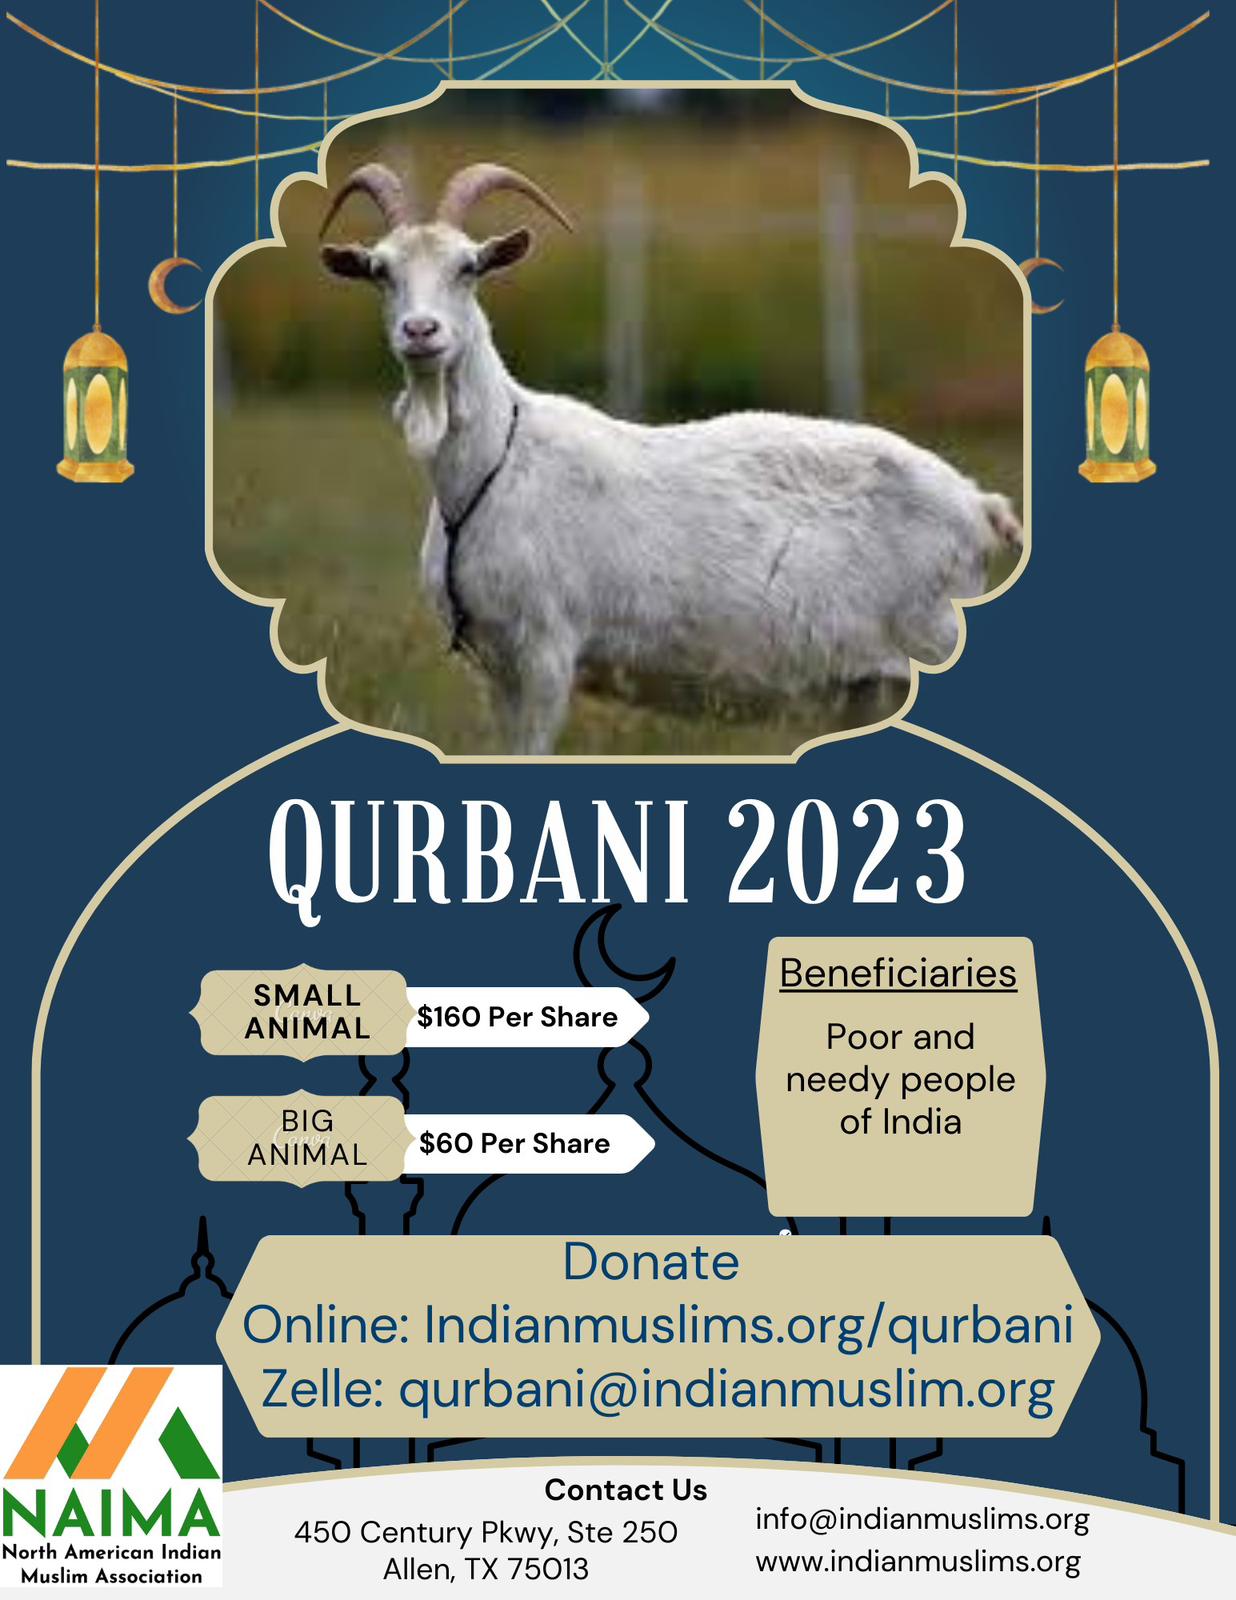 Qurbani 2022